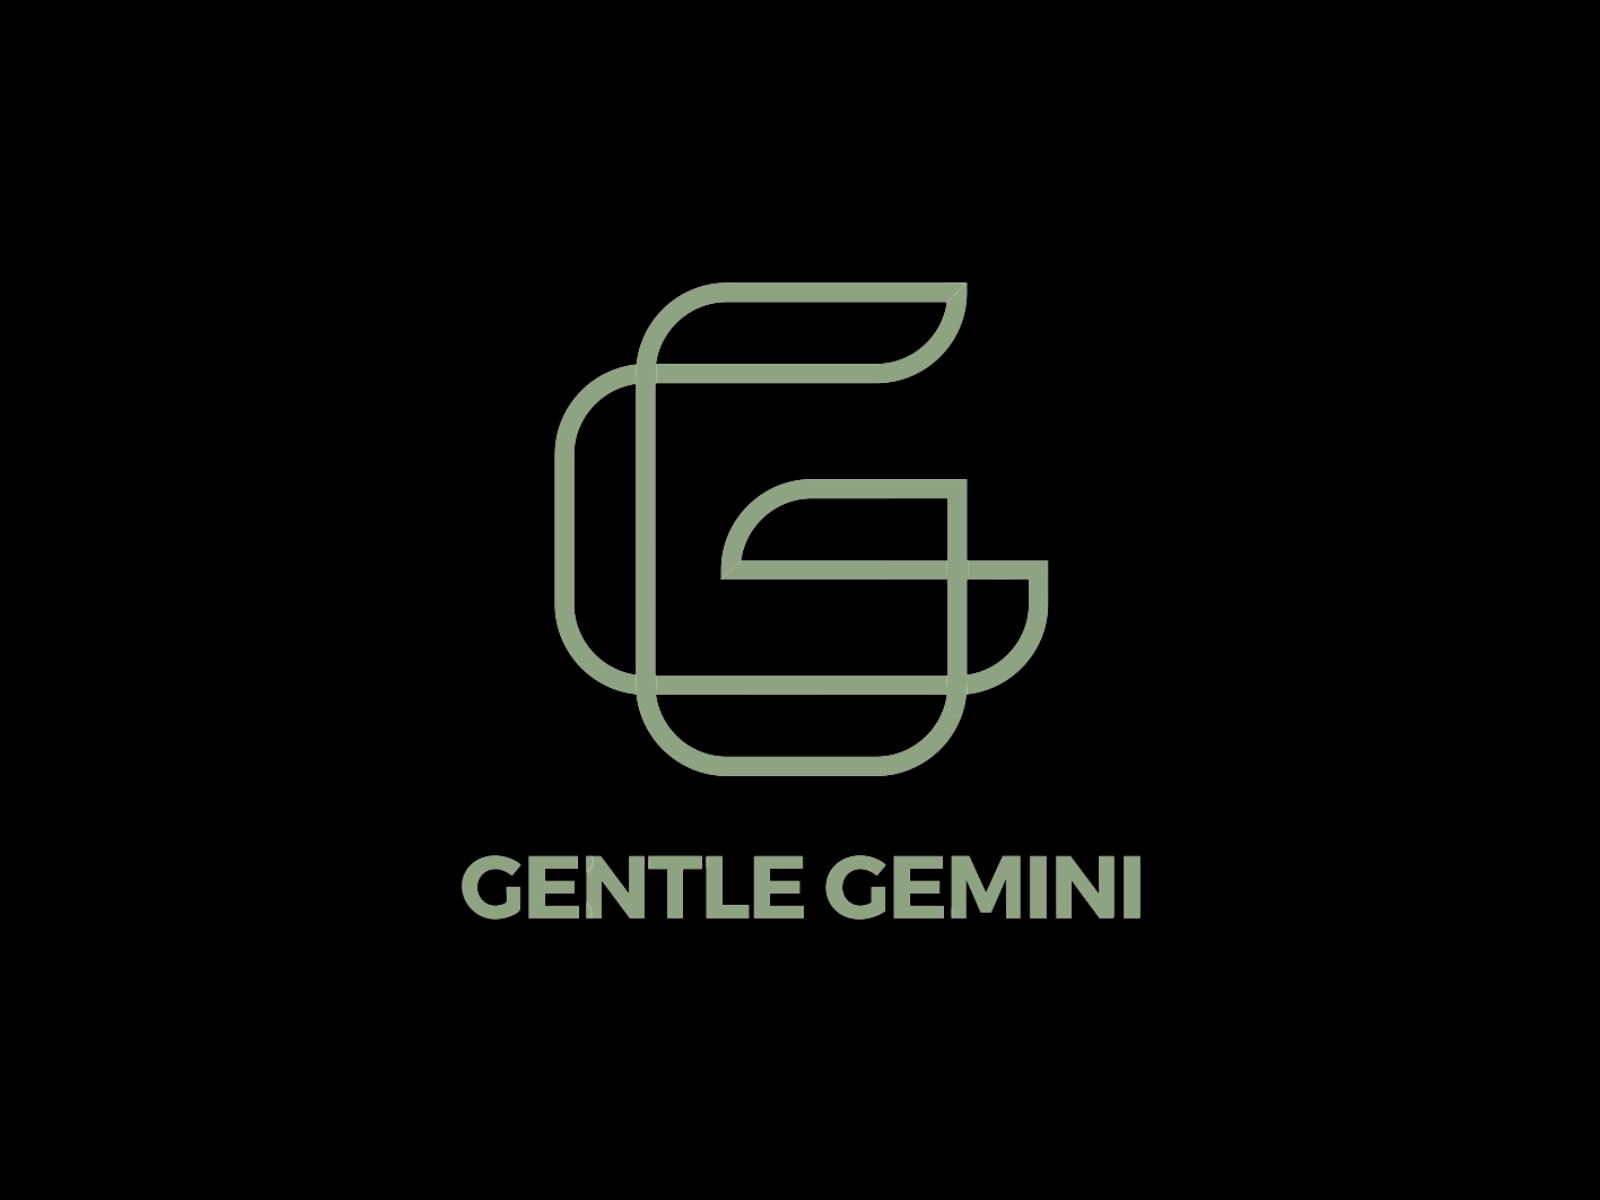 Gentle Gemini Logo animation 2d animation animated gif animated logo intro logo animation logo intro logo motion logo reveal logoanimation motion graphics motion logo smooth stroke logo animation